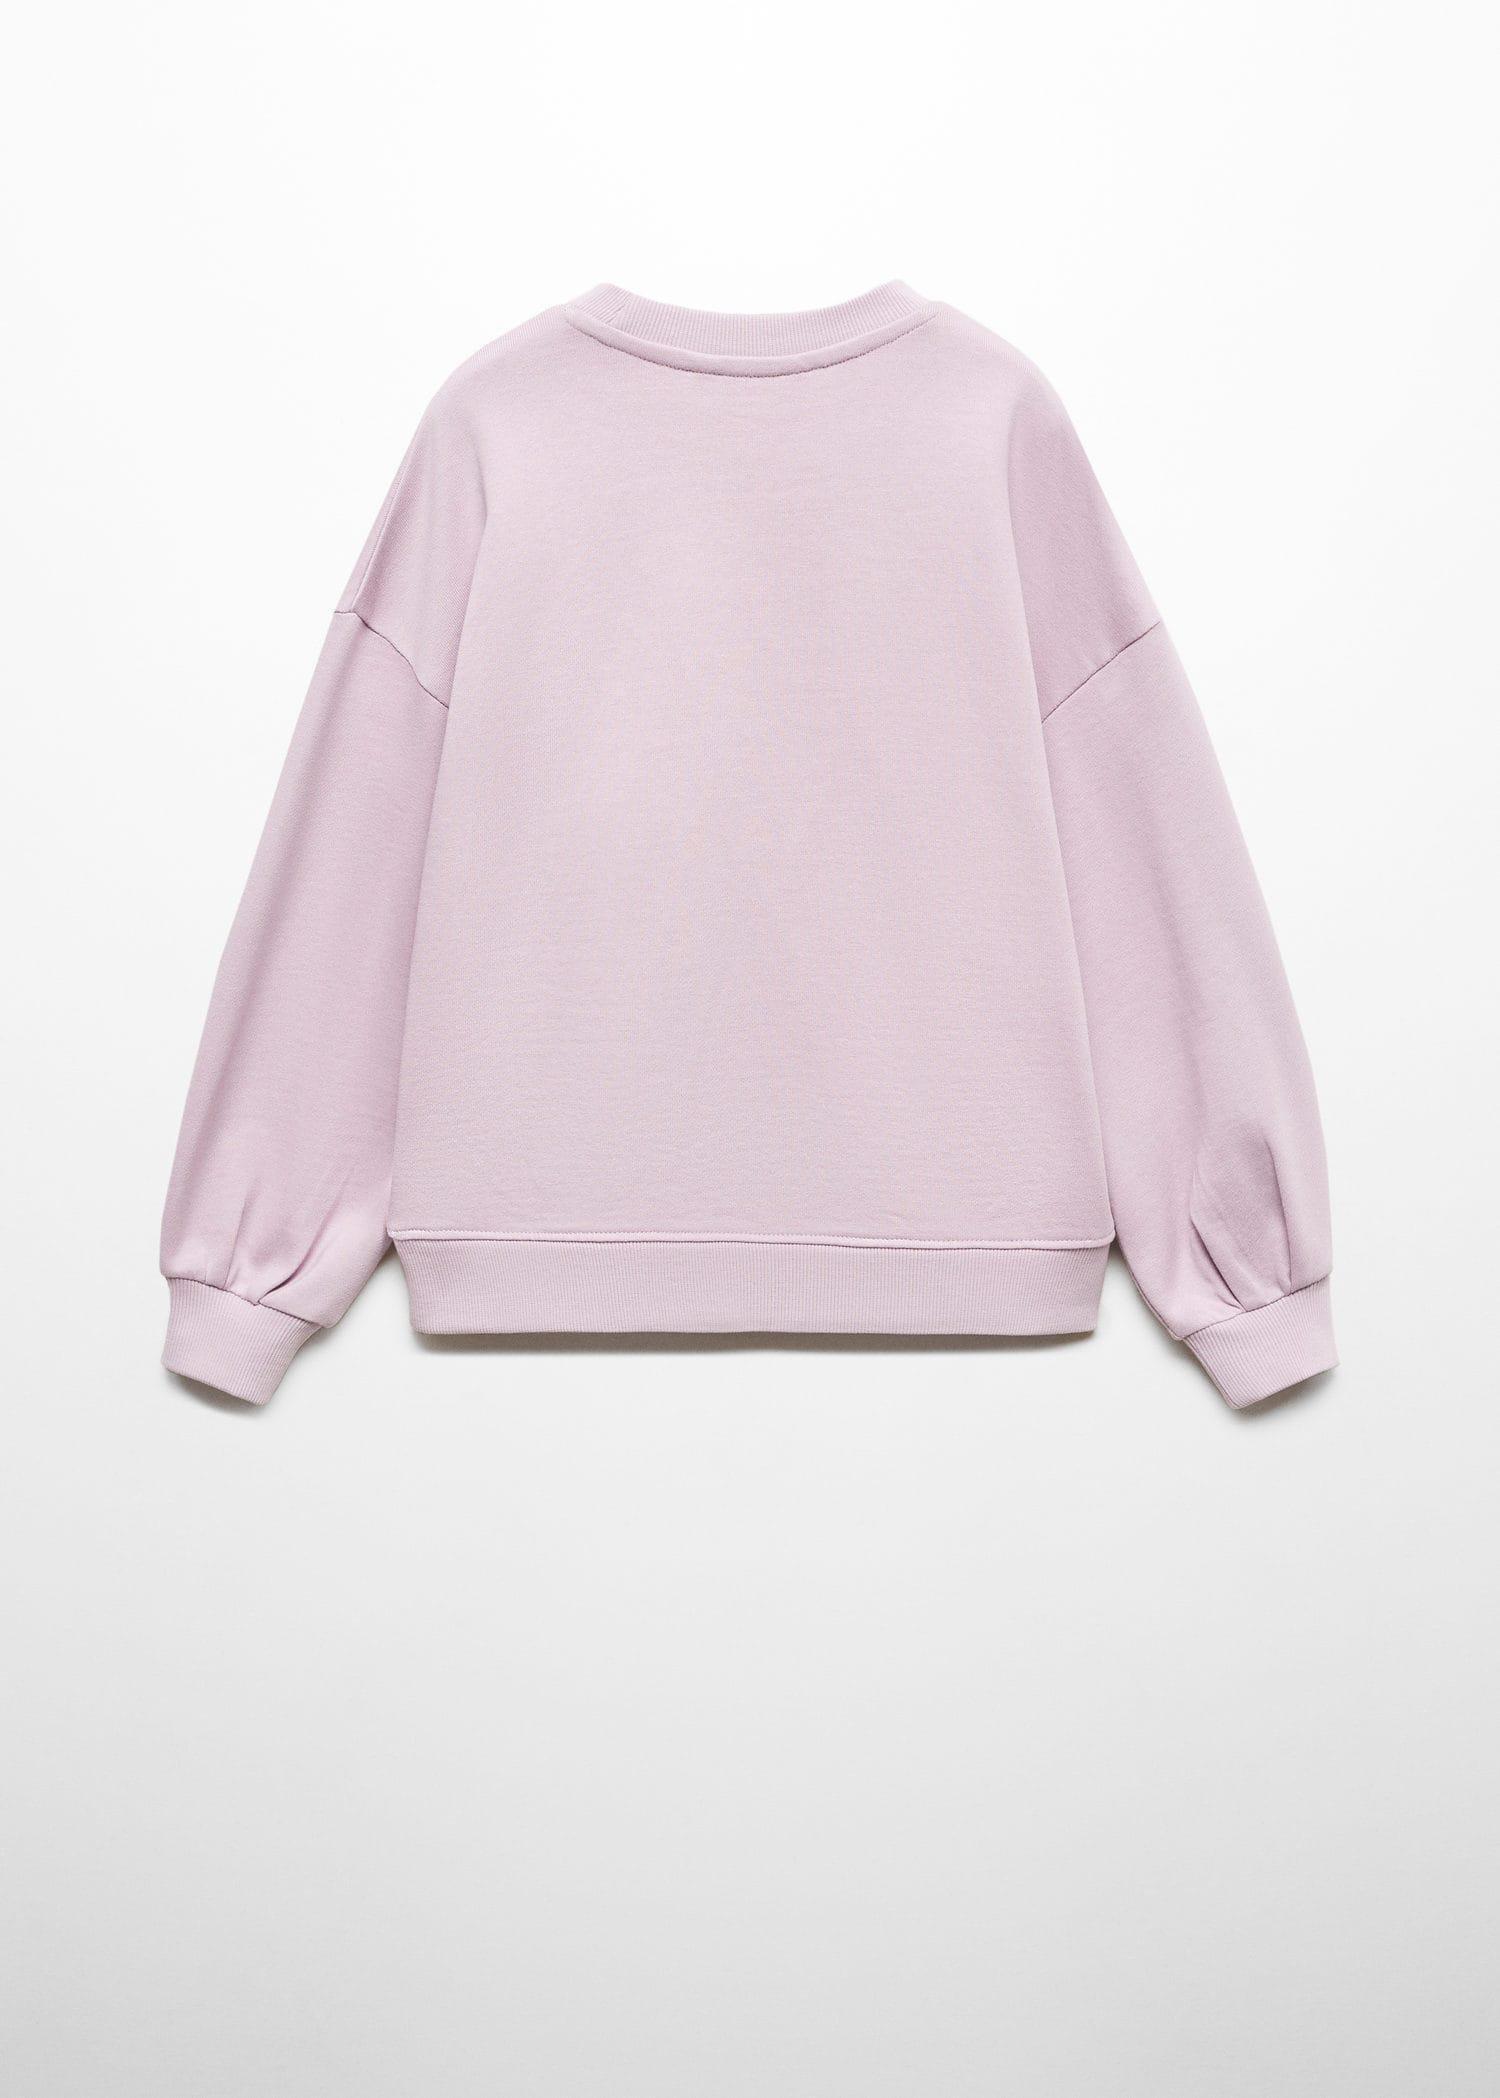 Mango - Purple Printed Cotton Sweatshirt, Kids Girls